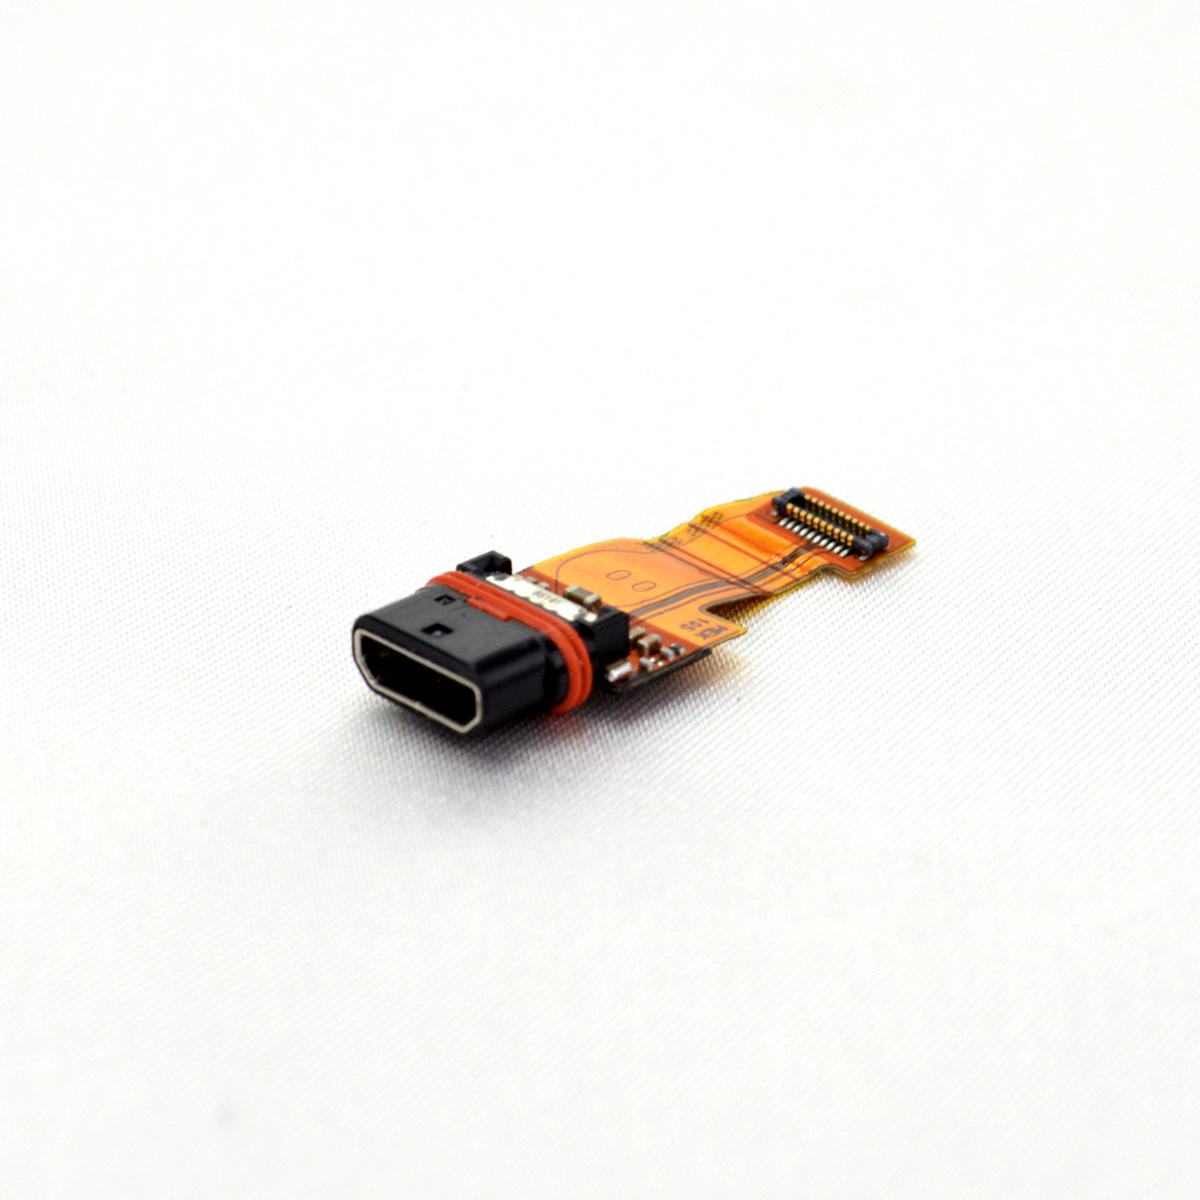 XperiaXPerformance ドックコネクター Micro USB充電口 修理用部品 交換用パーツ エクスぺリアXパフォーマンス SONY SO-04H SOV33 502SO画像